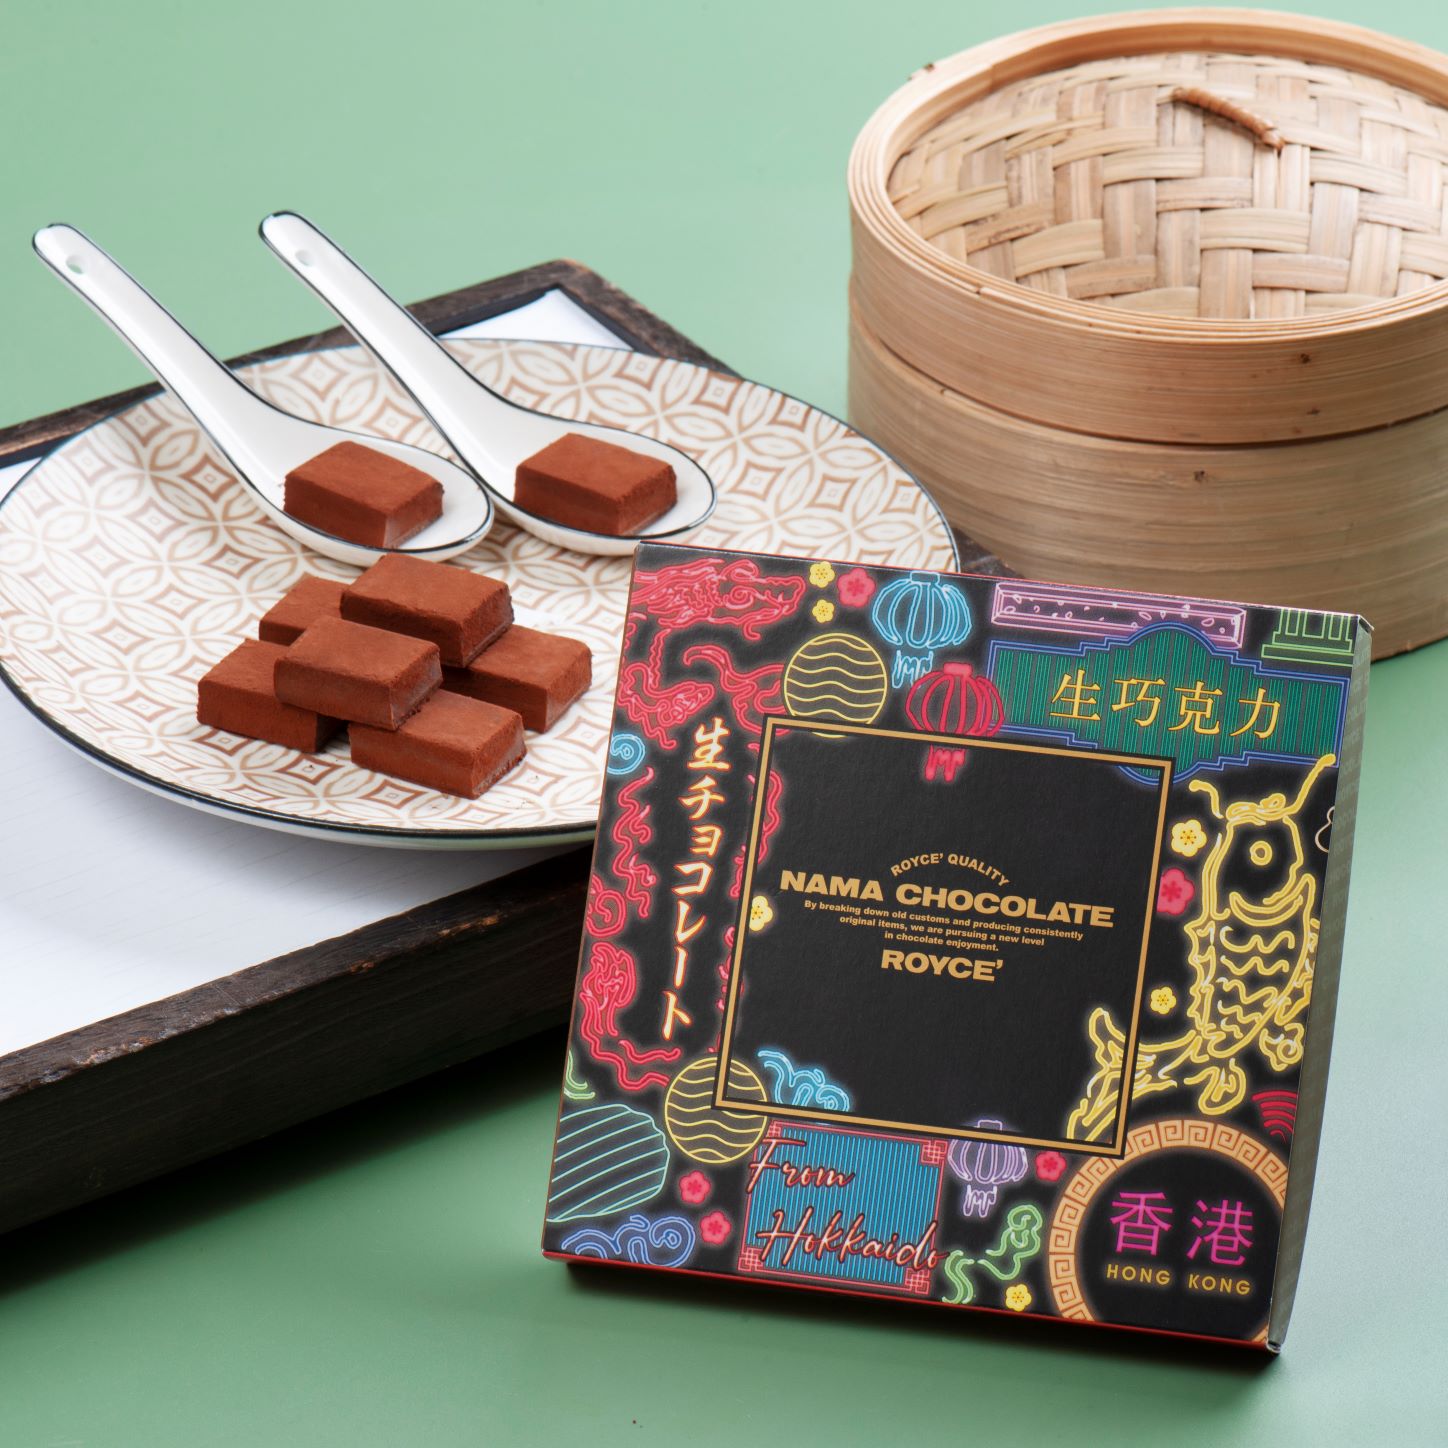 NEW: ROYCE’ Hong Kong Special-edition Nama Chocolate